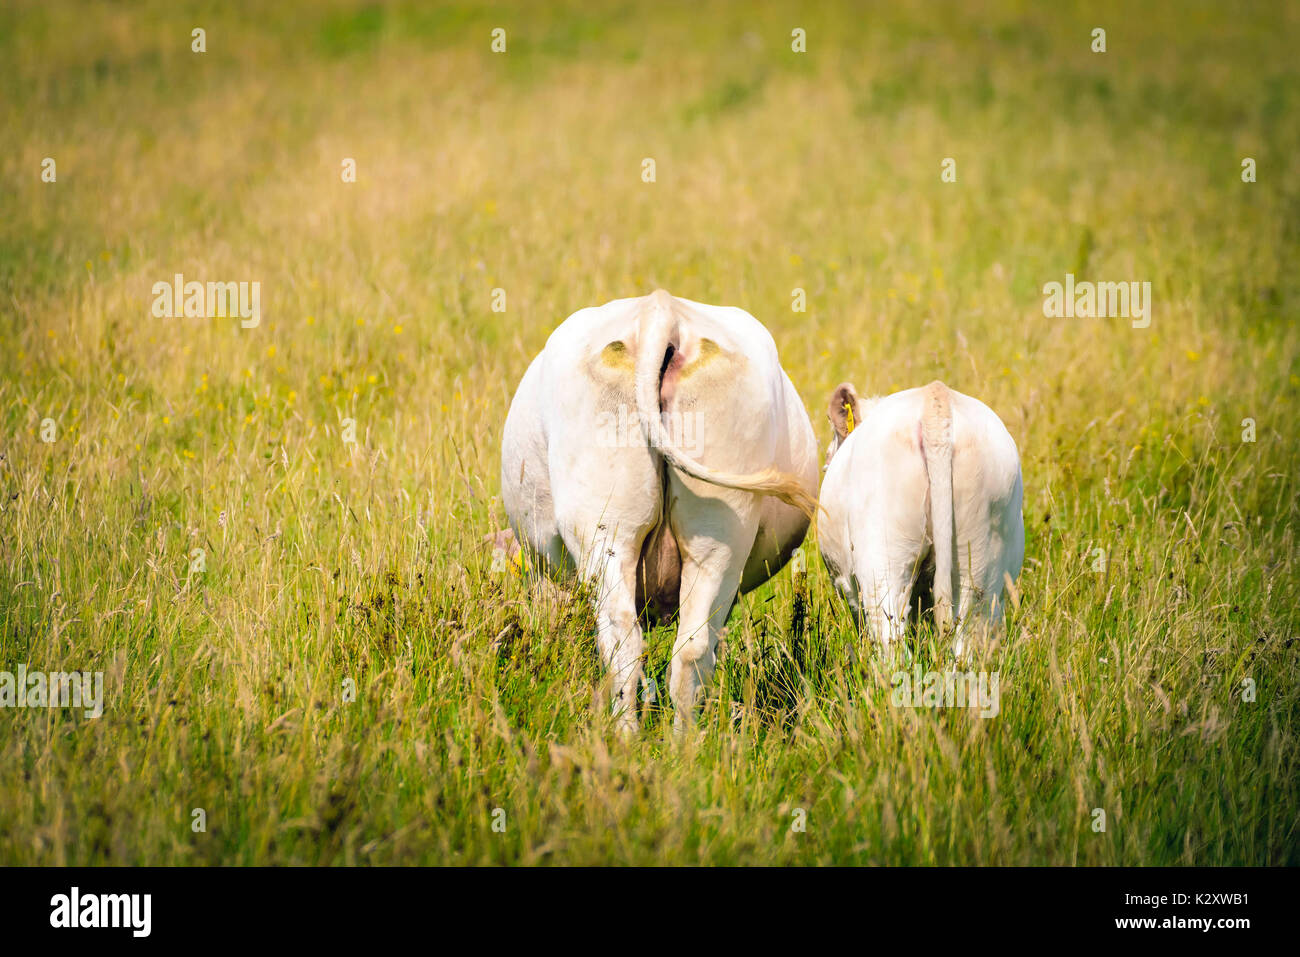 Two cows on the pasture, Zwei Kuehe auf der Weide Stock Photo